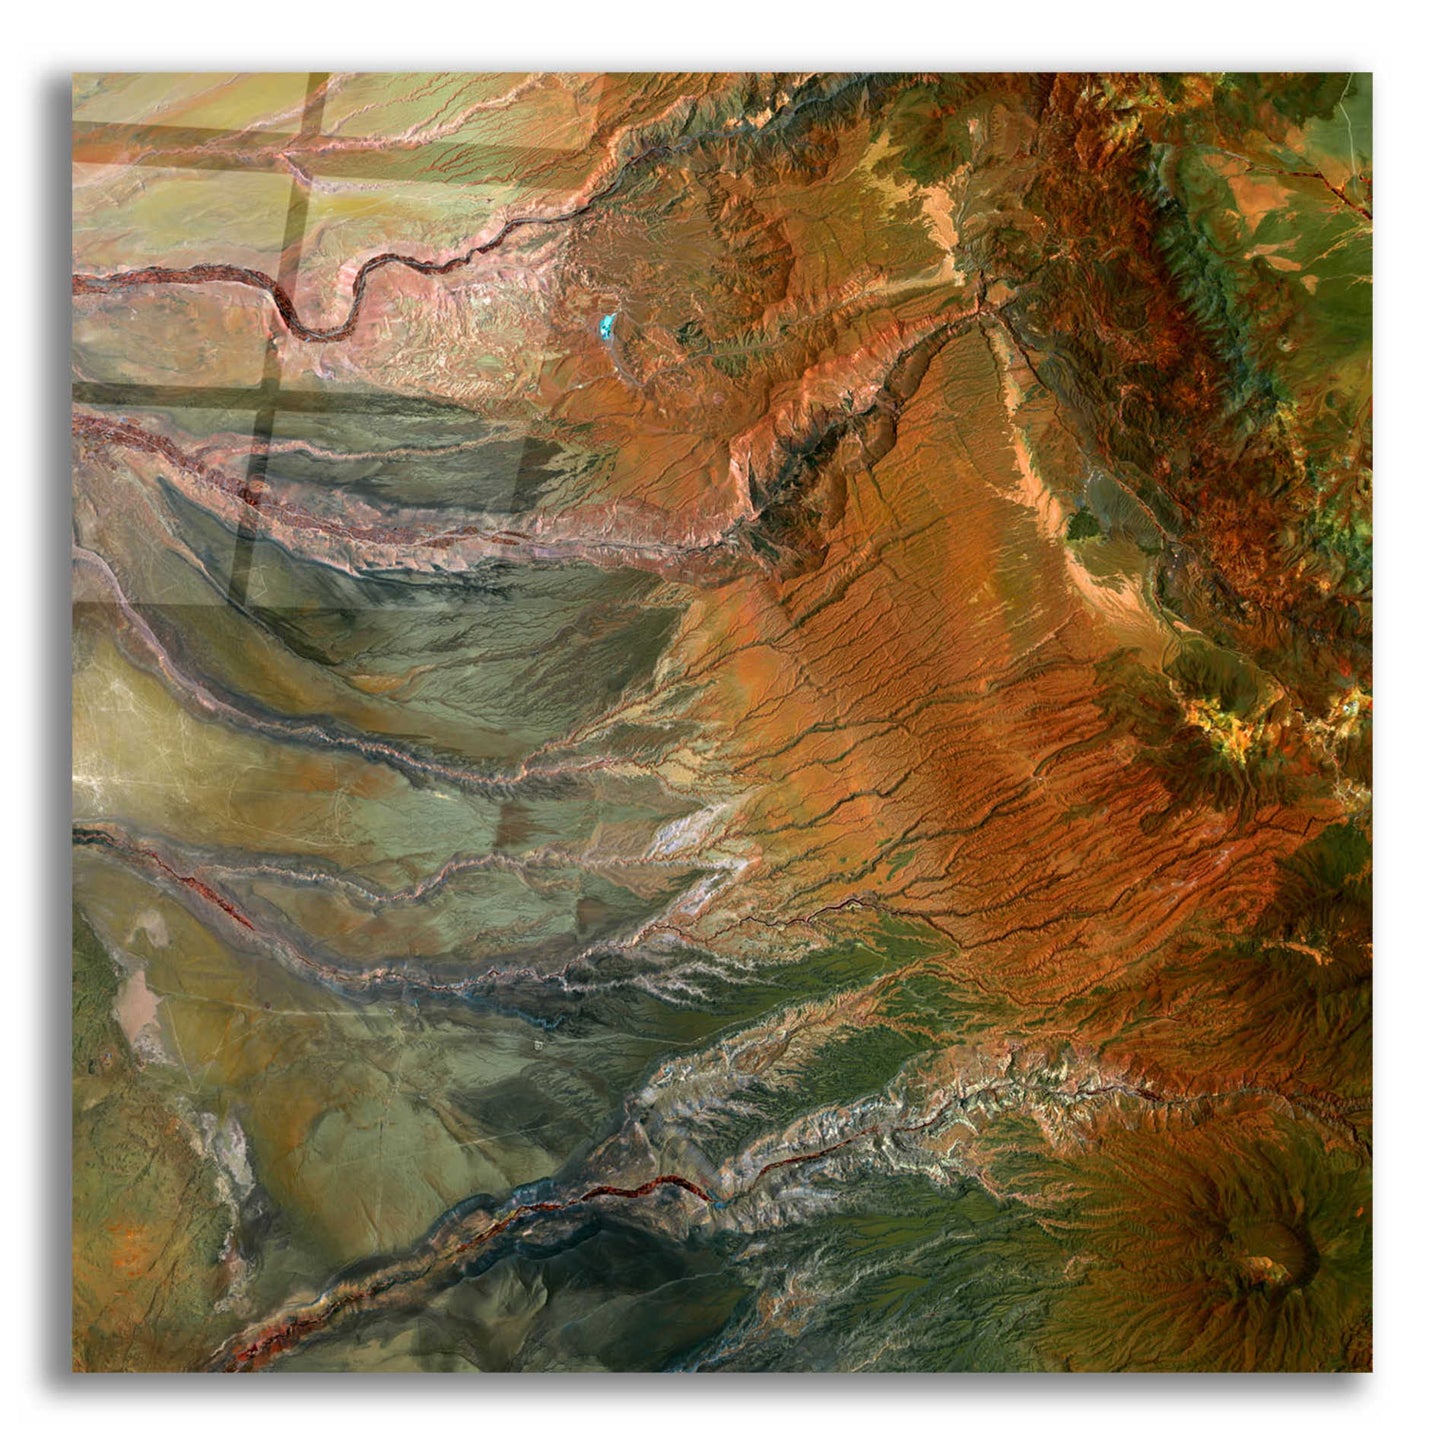 Epic Art 'Earth as Art: Moody Carvings,' Acrylic Glass Wall Art,12x12x1.1x0,18x18x1.1x0,26x26x1.74x0,37x37x1.74x0